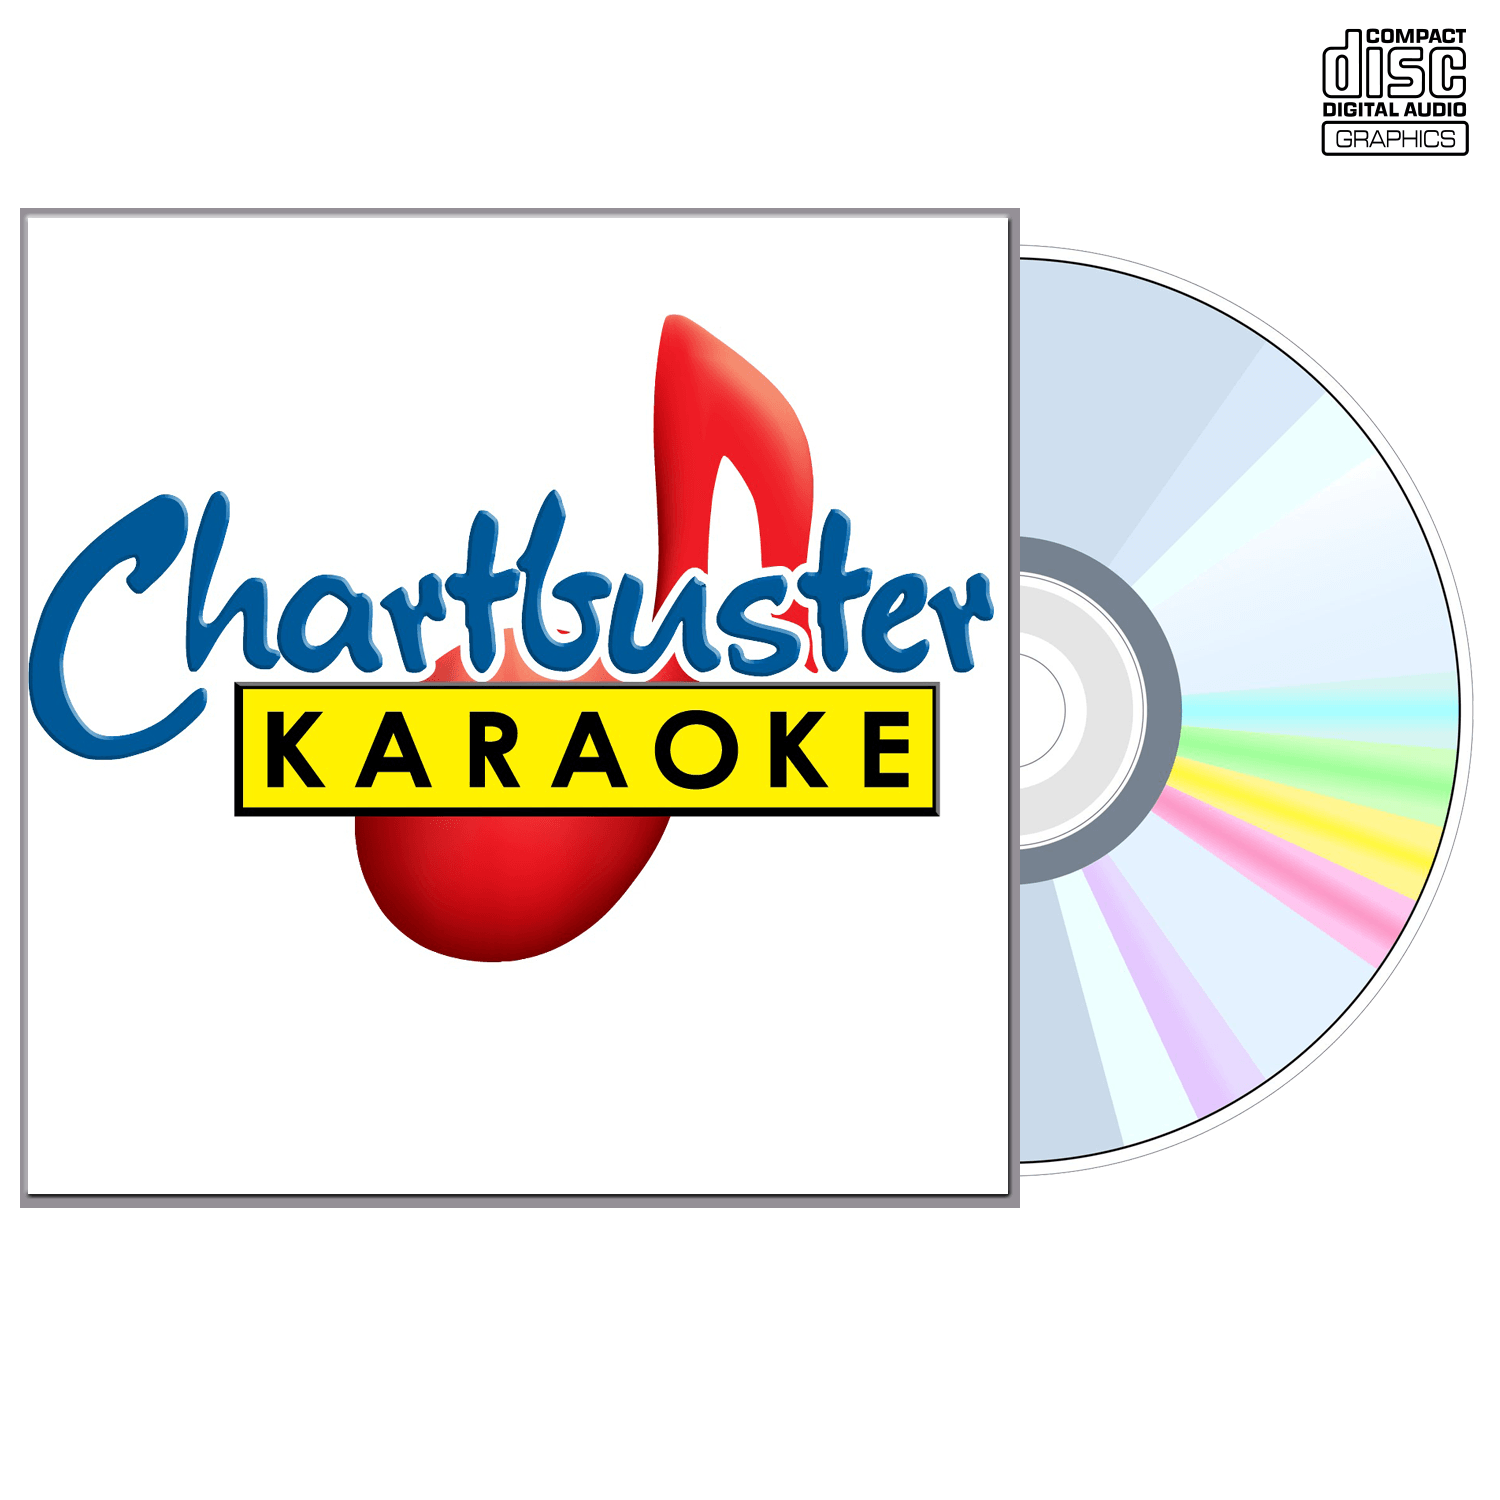 Best Of Kenny Chesney - CD+G - Chartbuster Karaoke - Karaoke Home Entertainment